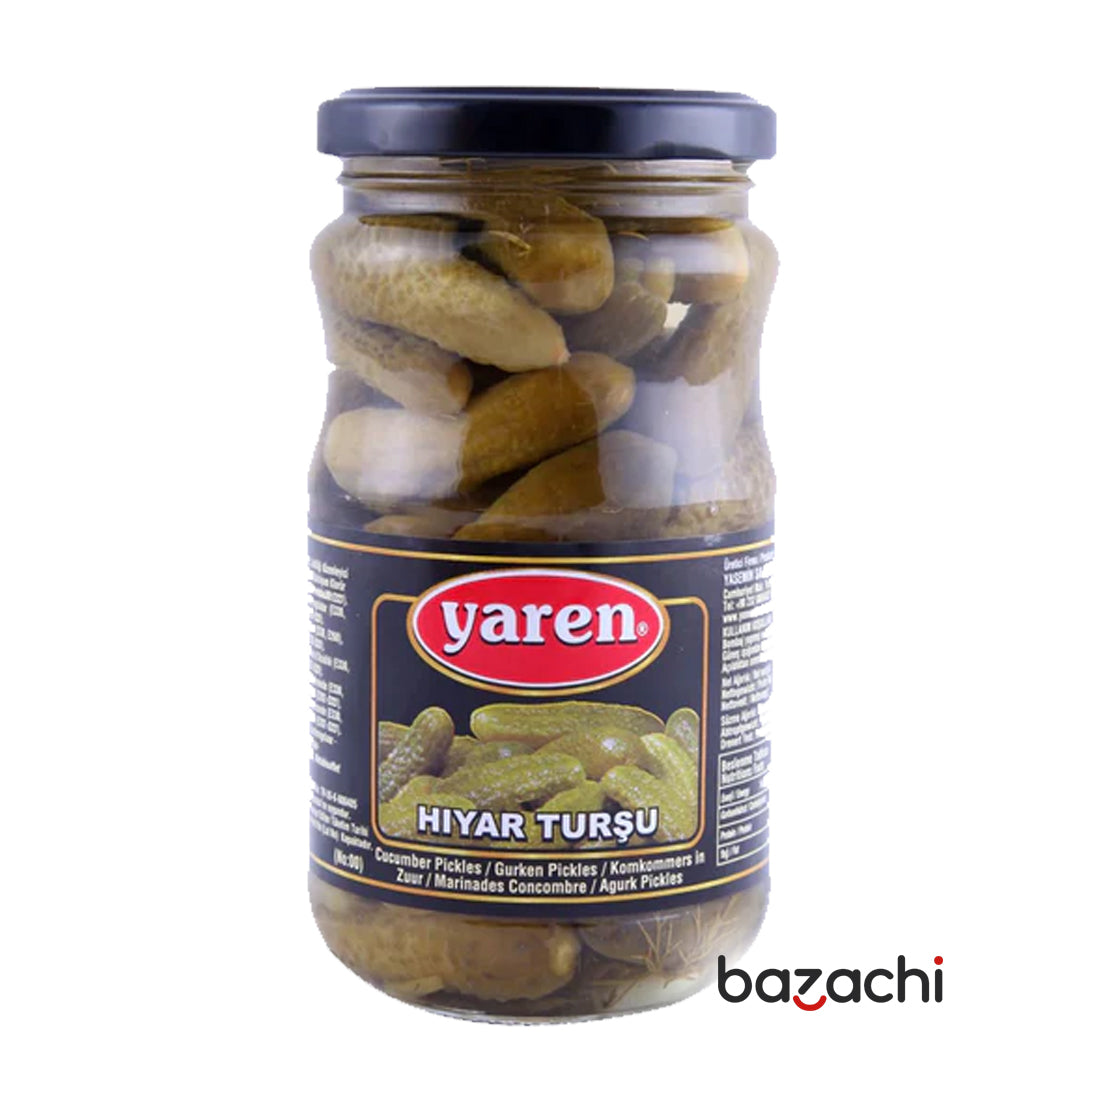 Yaren Cucumber Pickles  (720g)-Hiyar Tursu